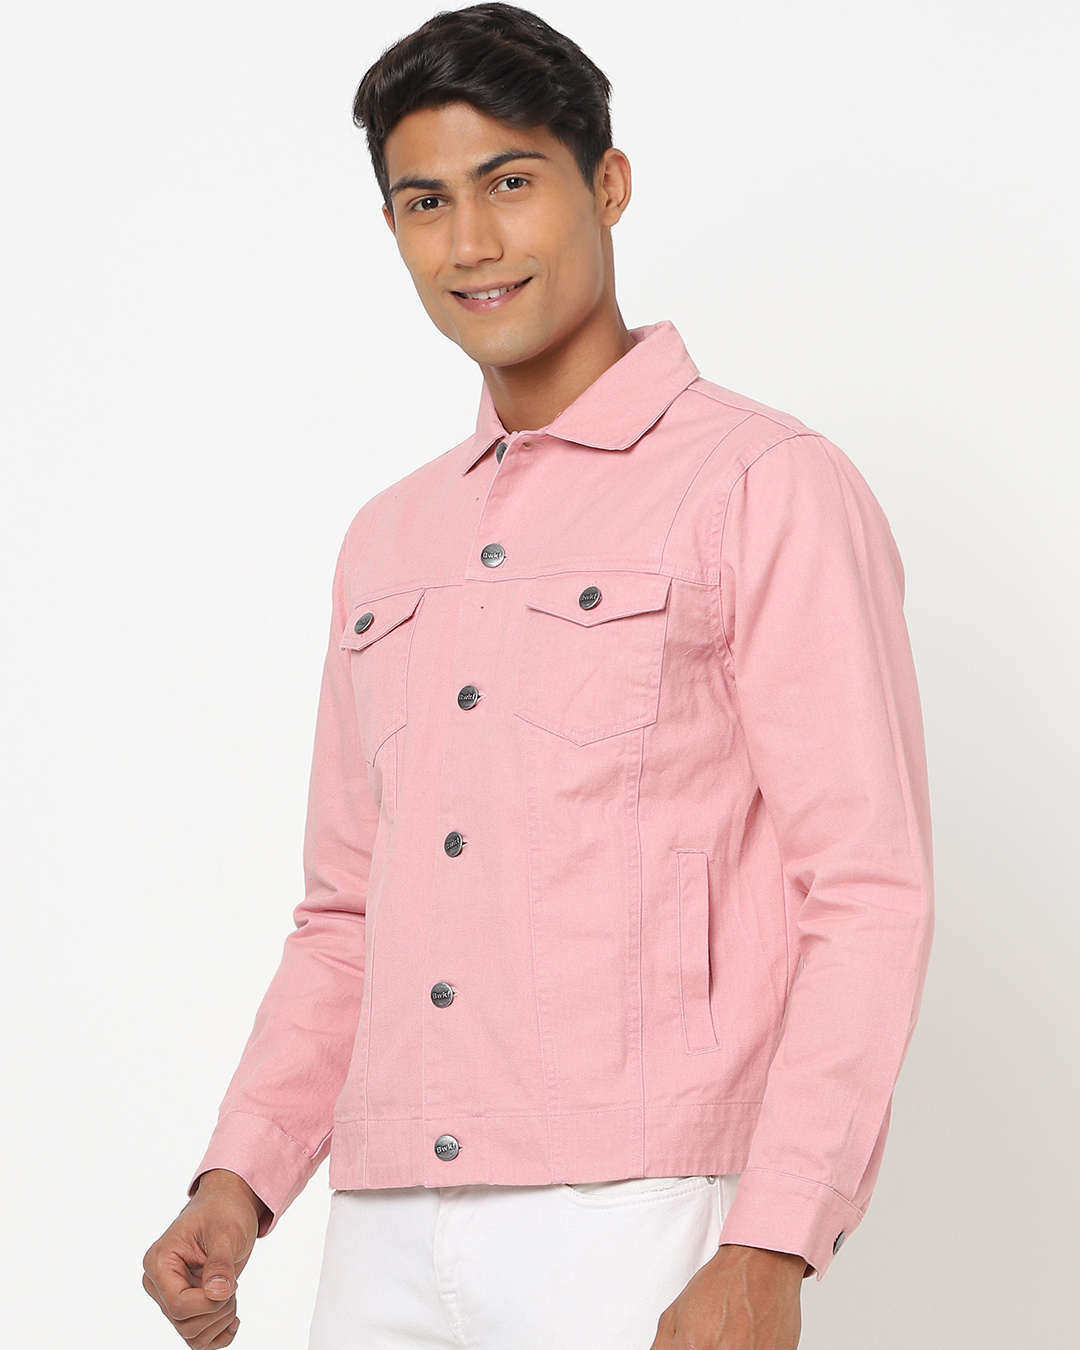 Buy Light Pink Twill Jacket for Men pink Online at Bewakoof